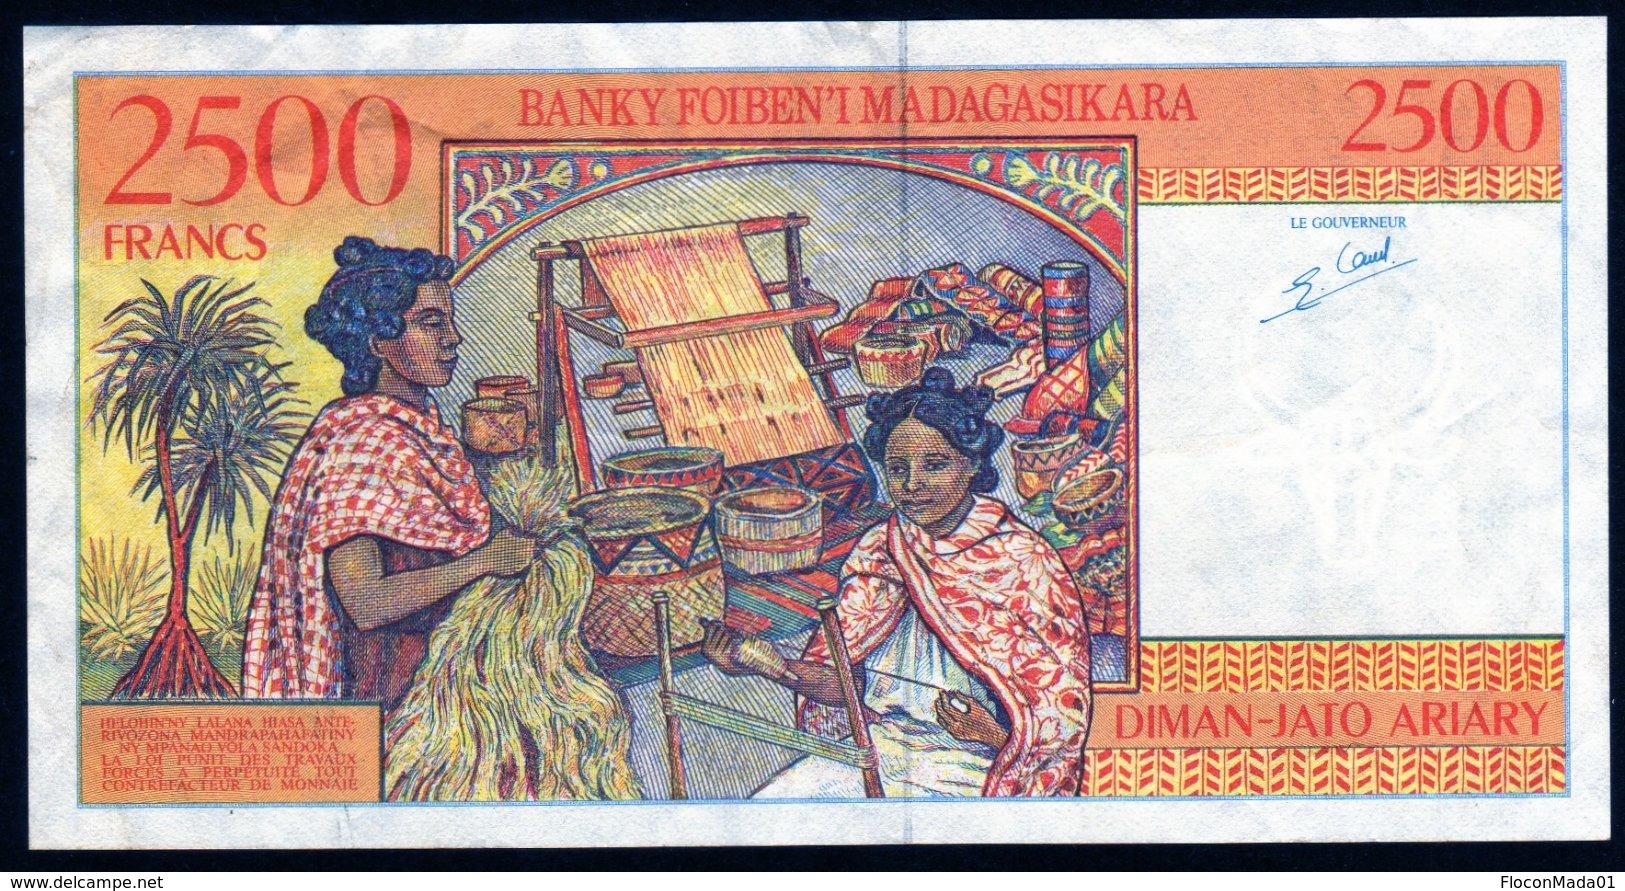 Madagascar 1998 2500 Francs   AU   Voir Explications   Billet Rare En L'état - Madagascar